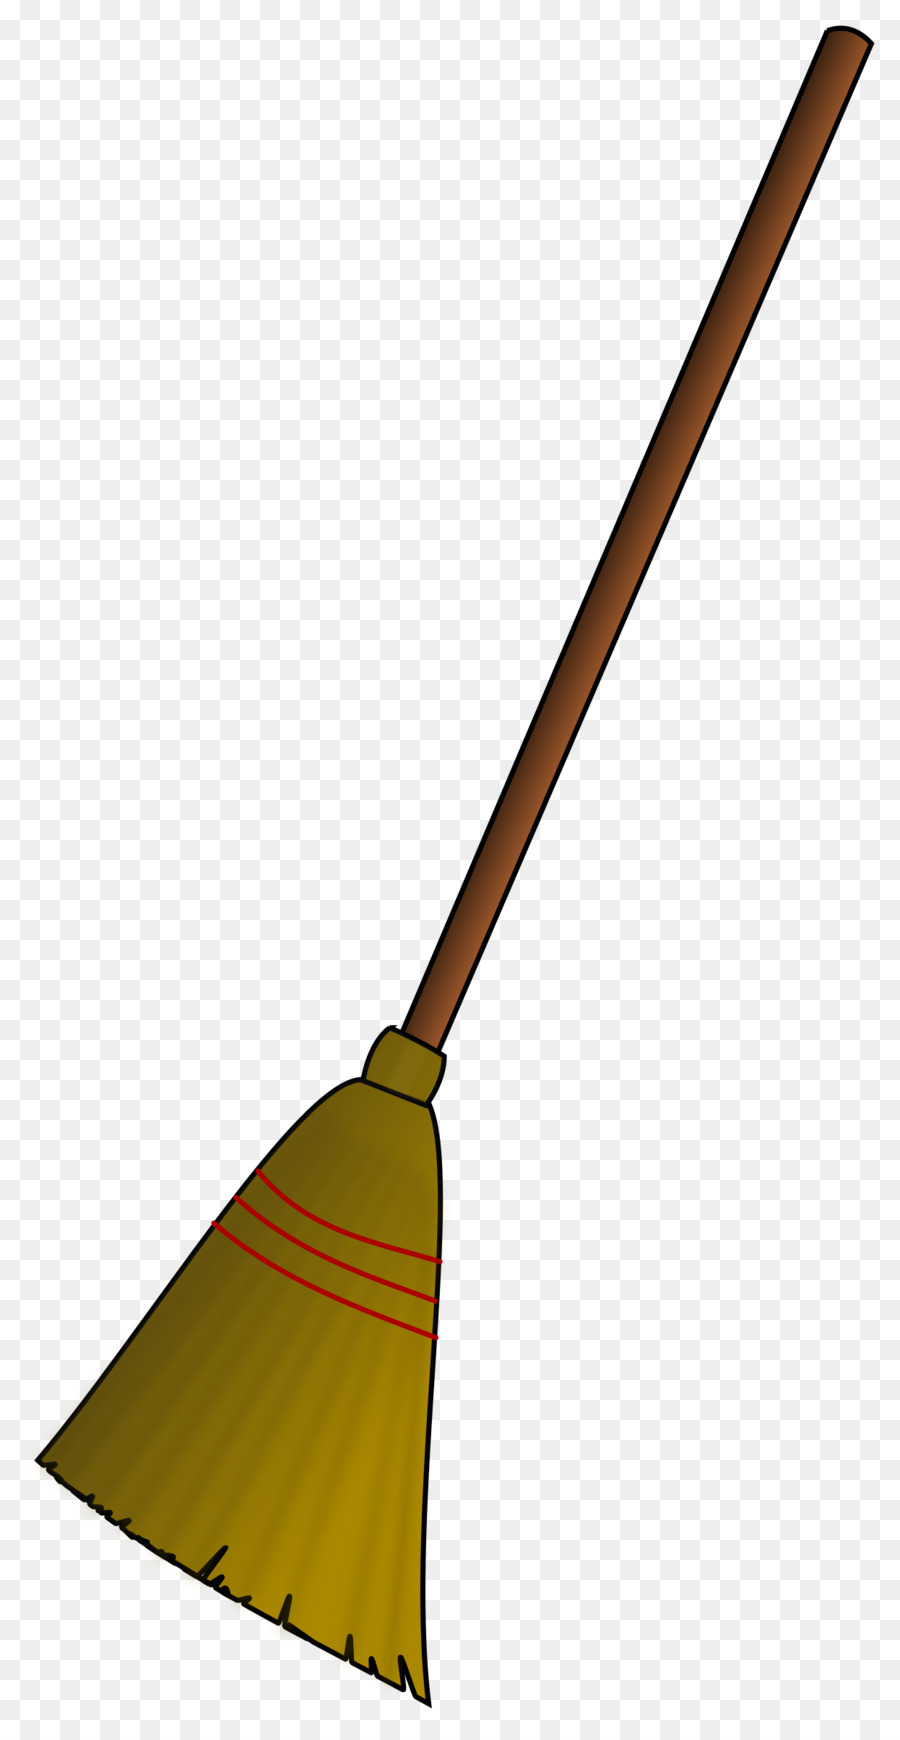 Broom Cleaning Clip art - broom png download - 1246*2400 - Free Transparent Broom png Download.